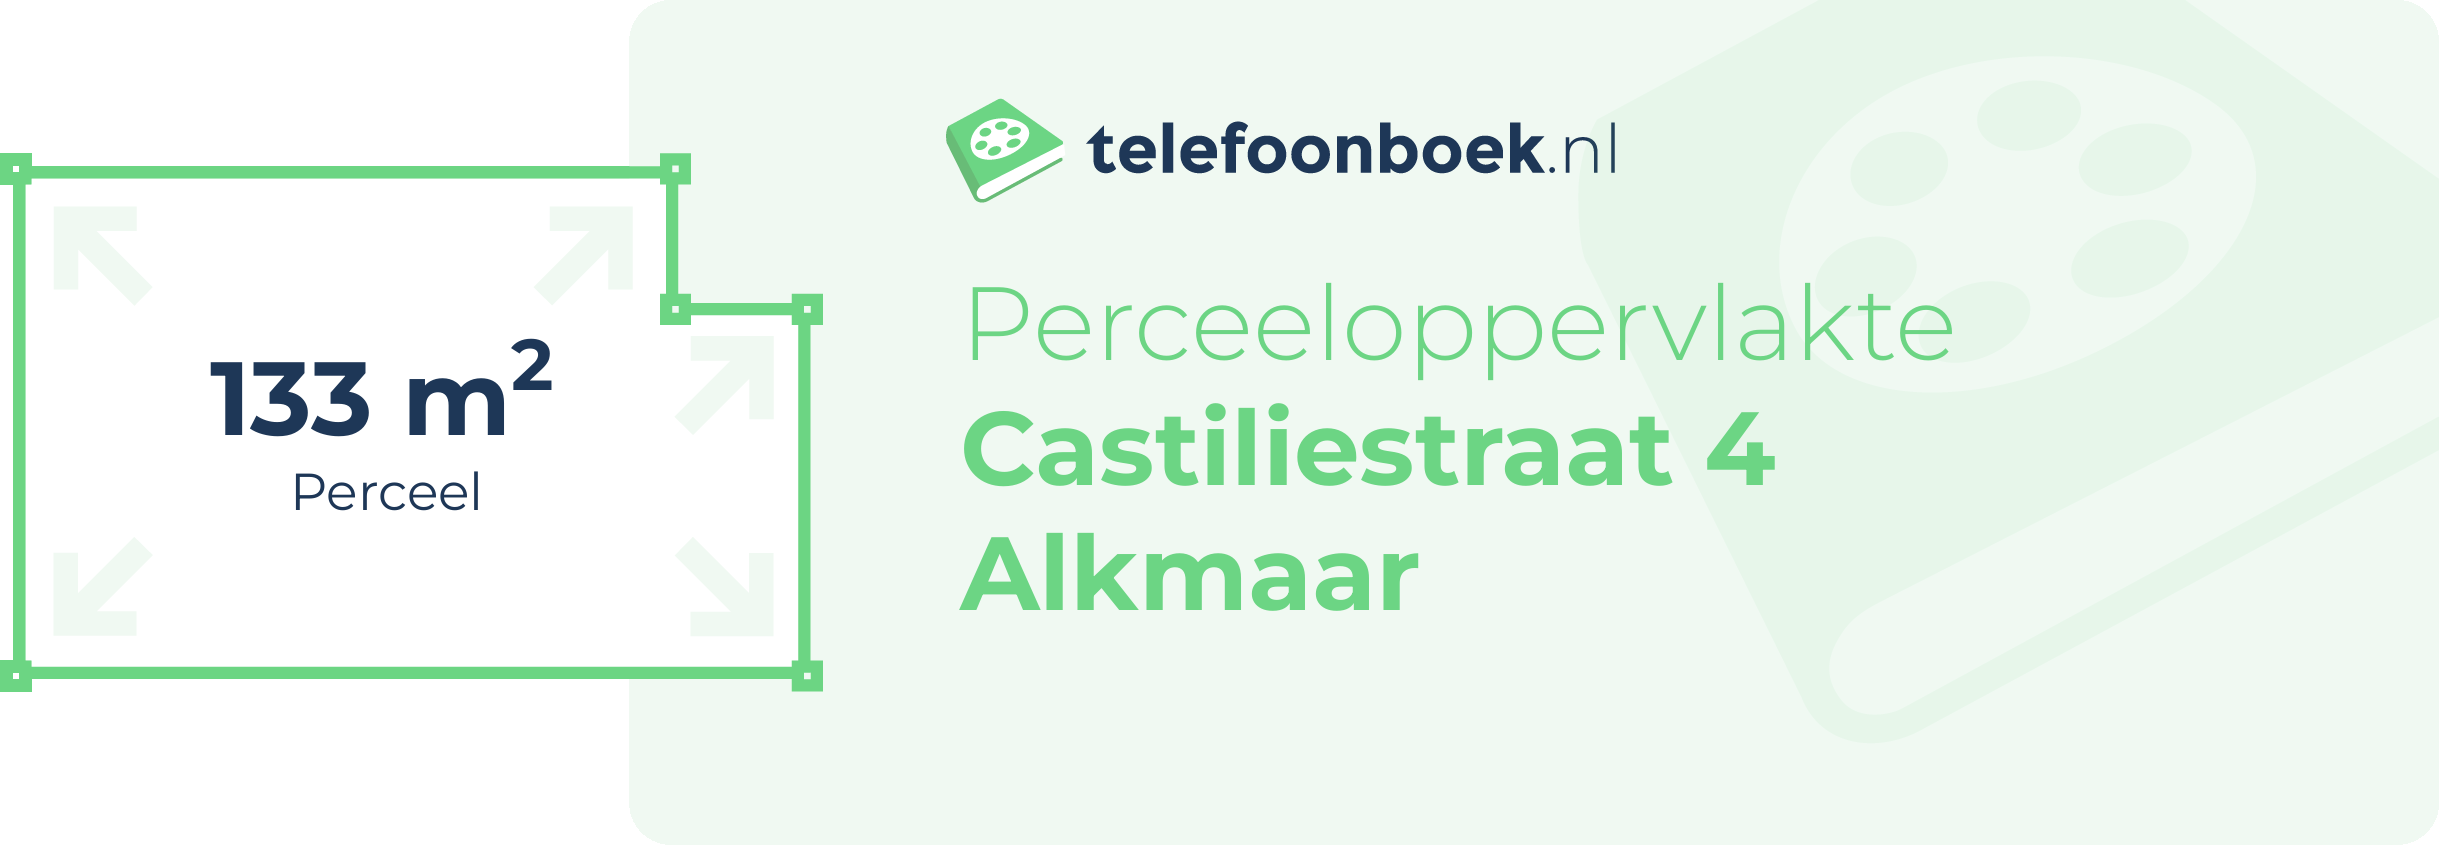 Perceeloppervlakte Castiliestraat 4 Alkmaar